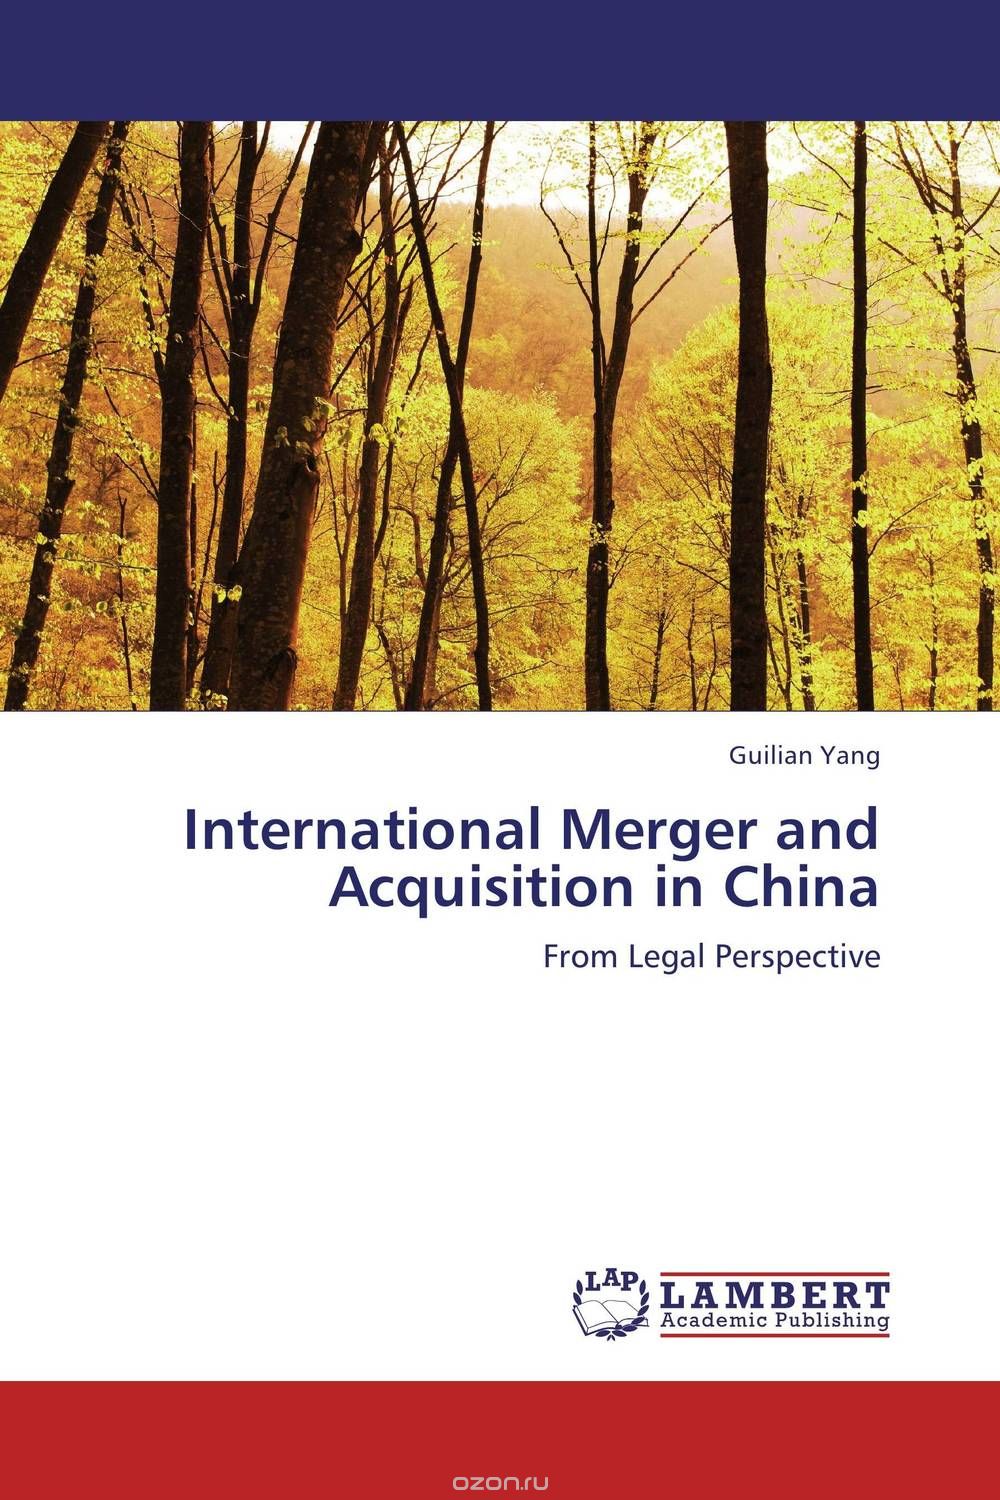 Скачать книгу "International Merger and Acquisition in China"